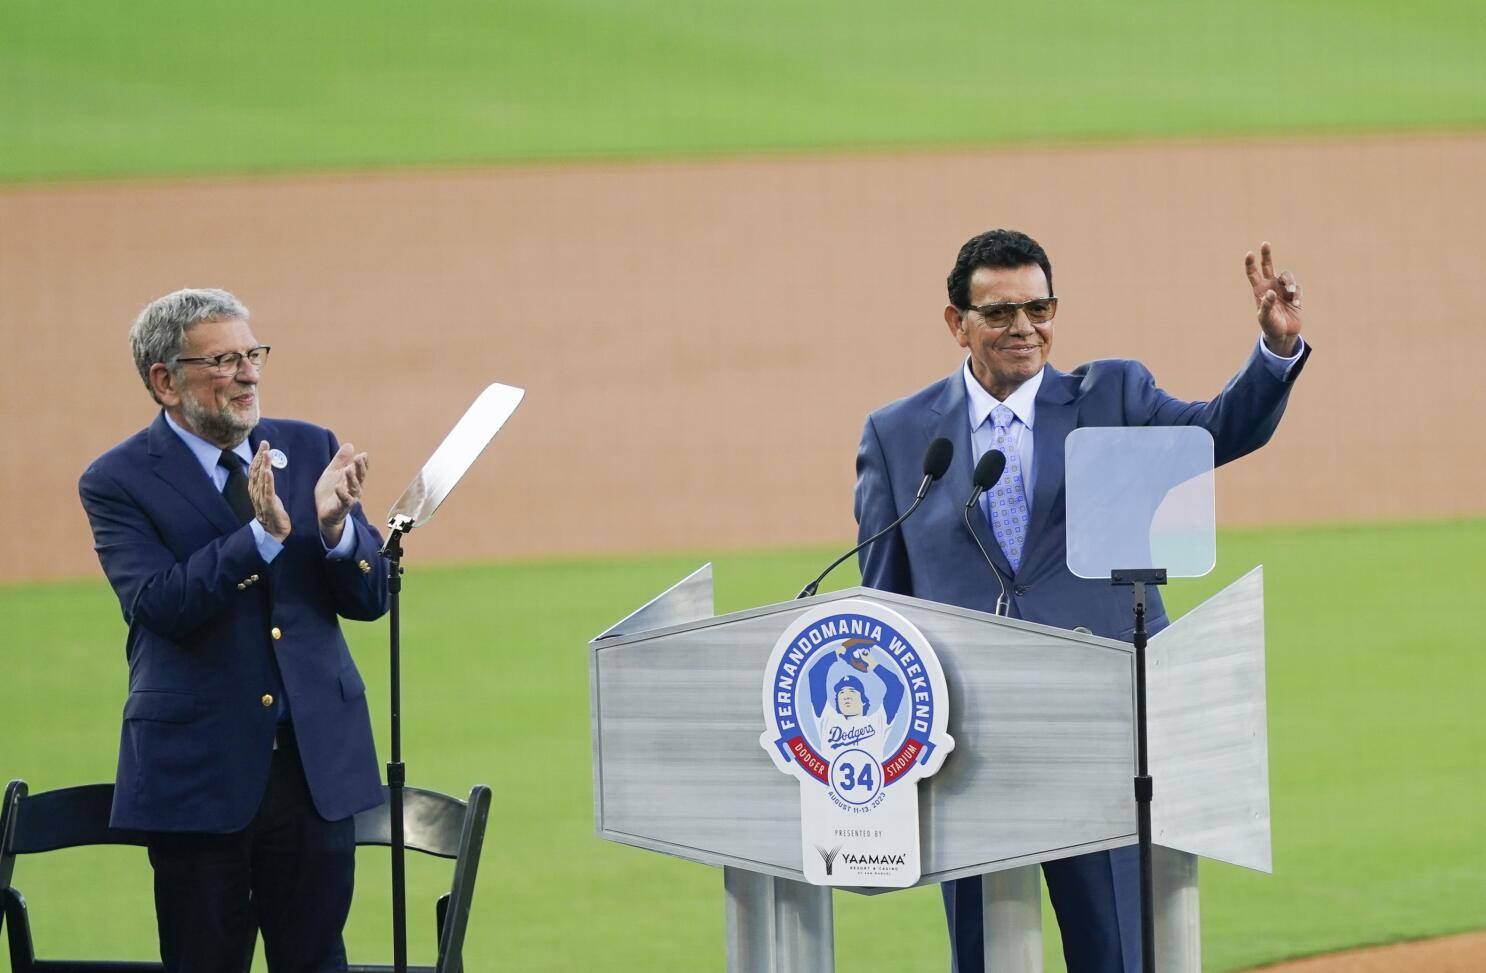 Dodgers News: Manny Mota Receives Latino Baseball Hall Of Fame Award At  Dodger Stadium 